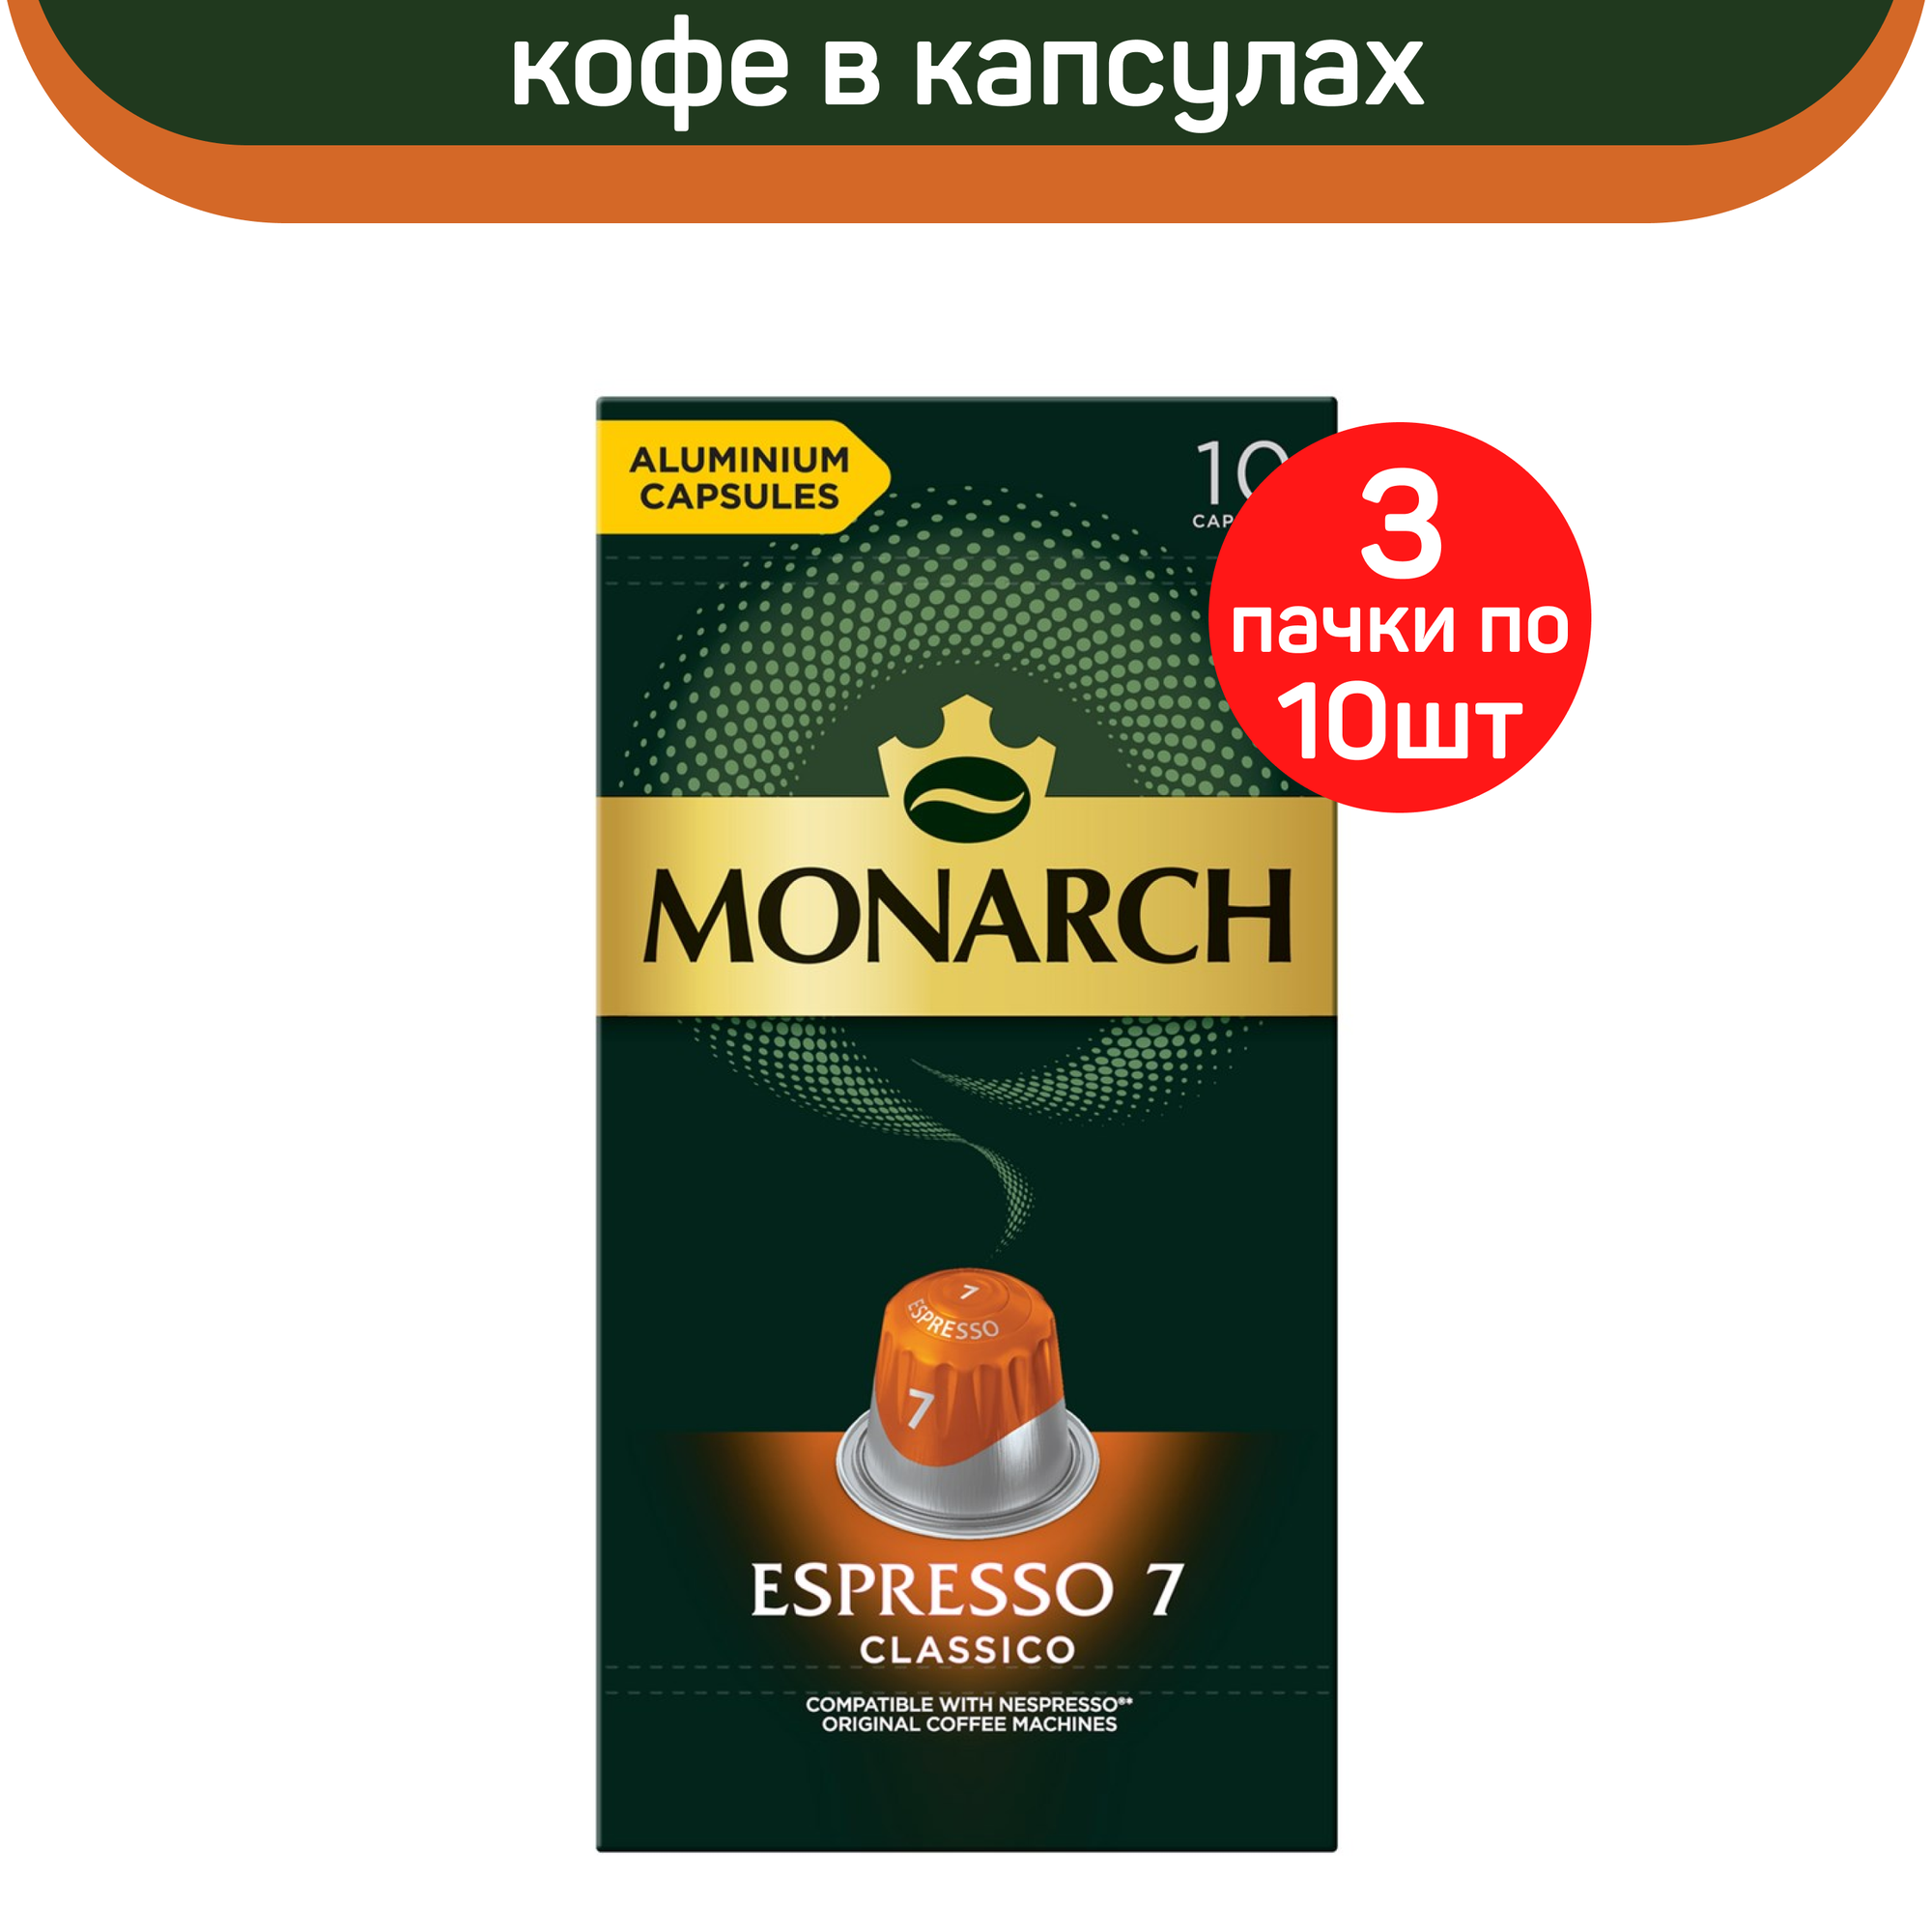 Кофе в капсулах Monarch Espresso 7 Classico, 3 упаковки по 10 капсул